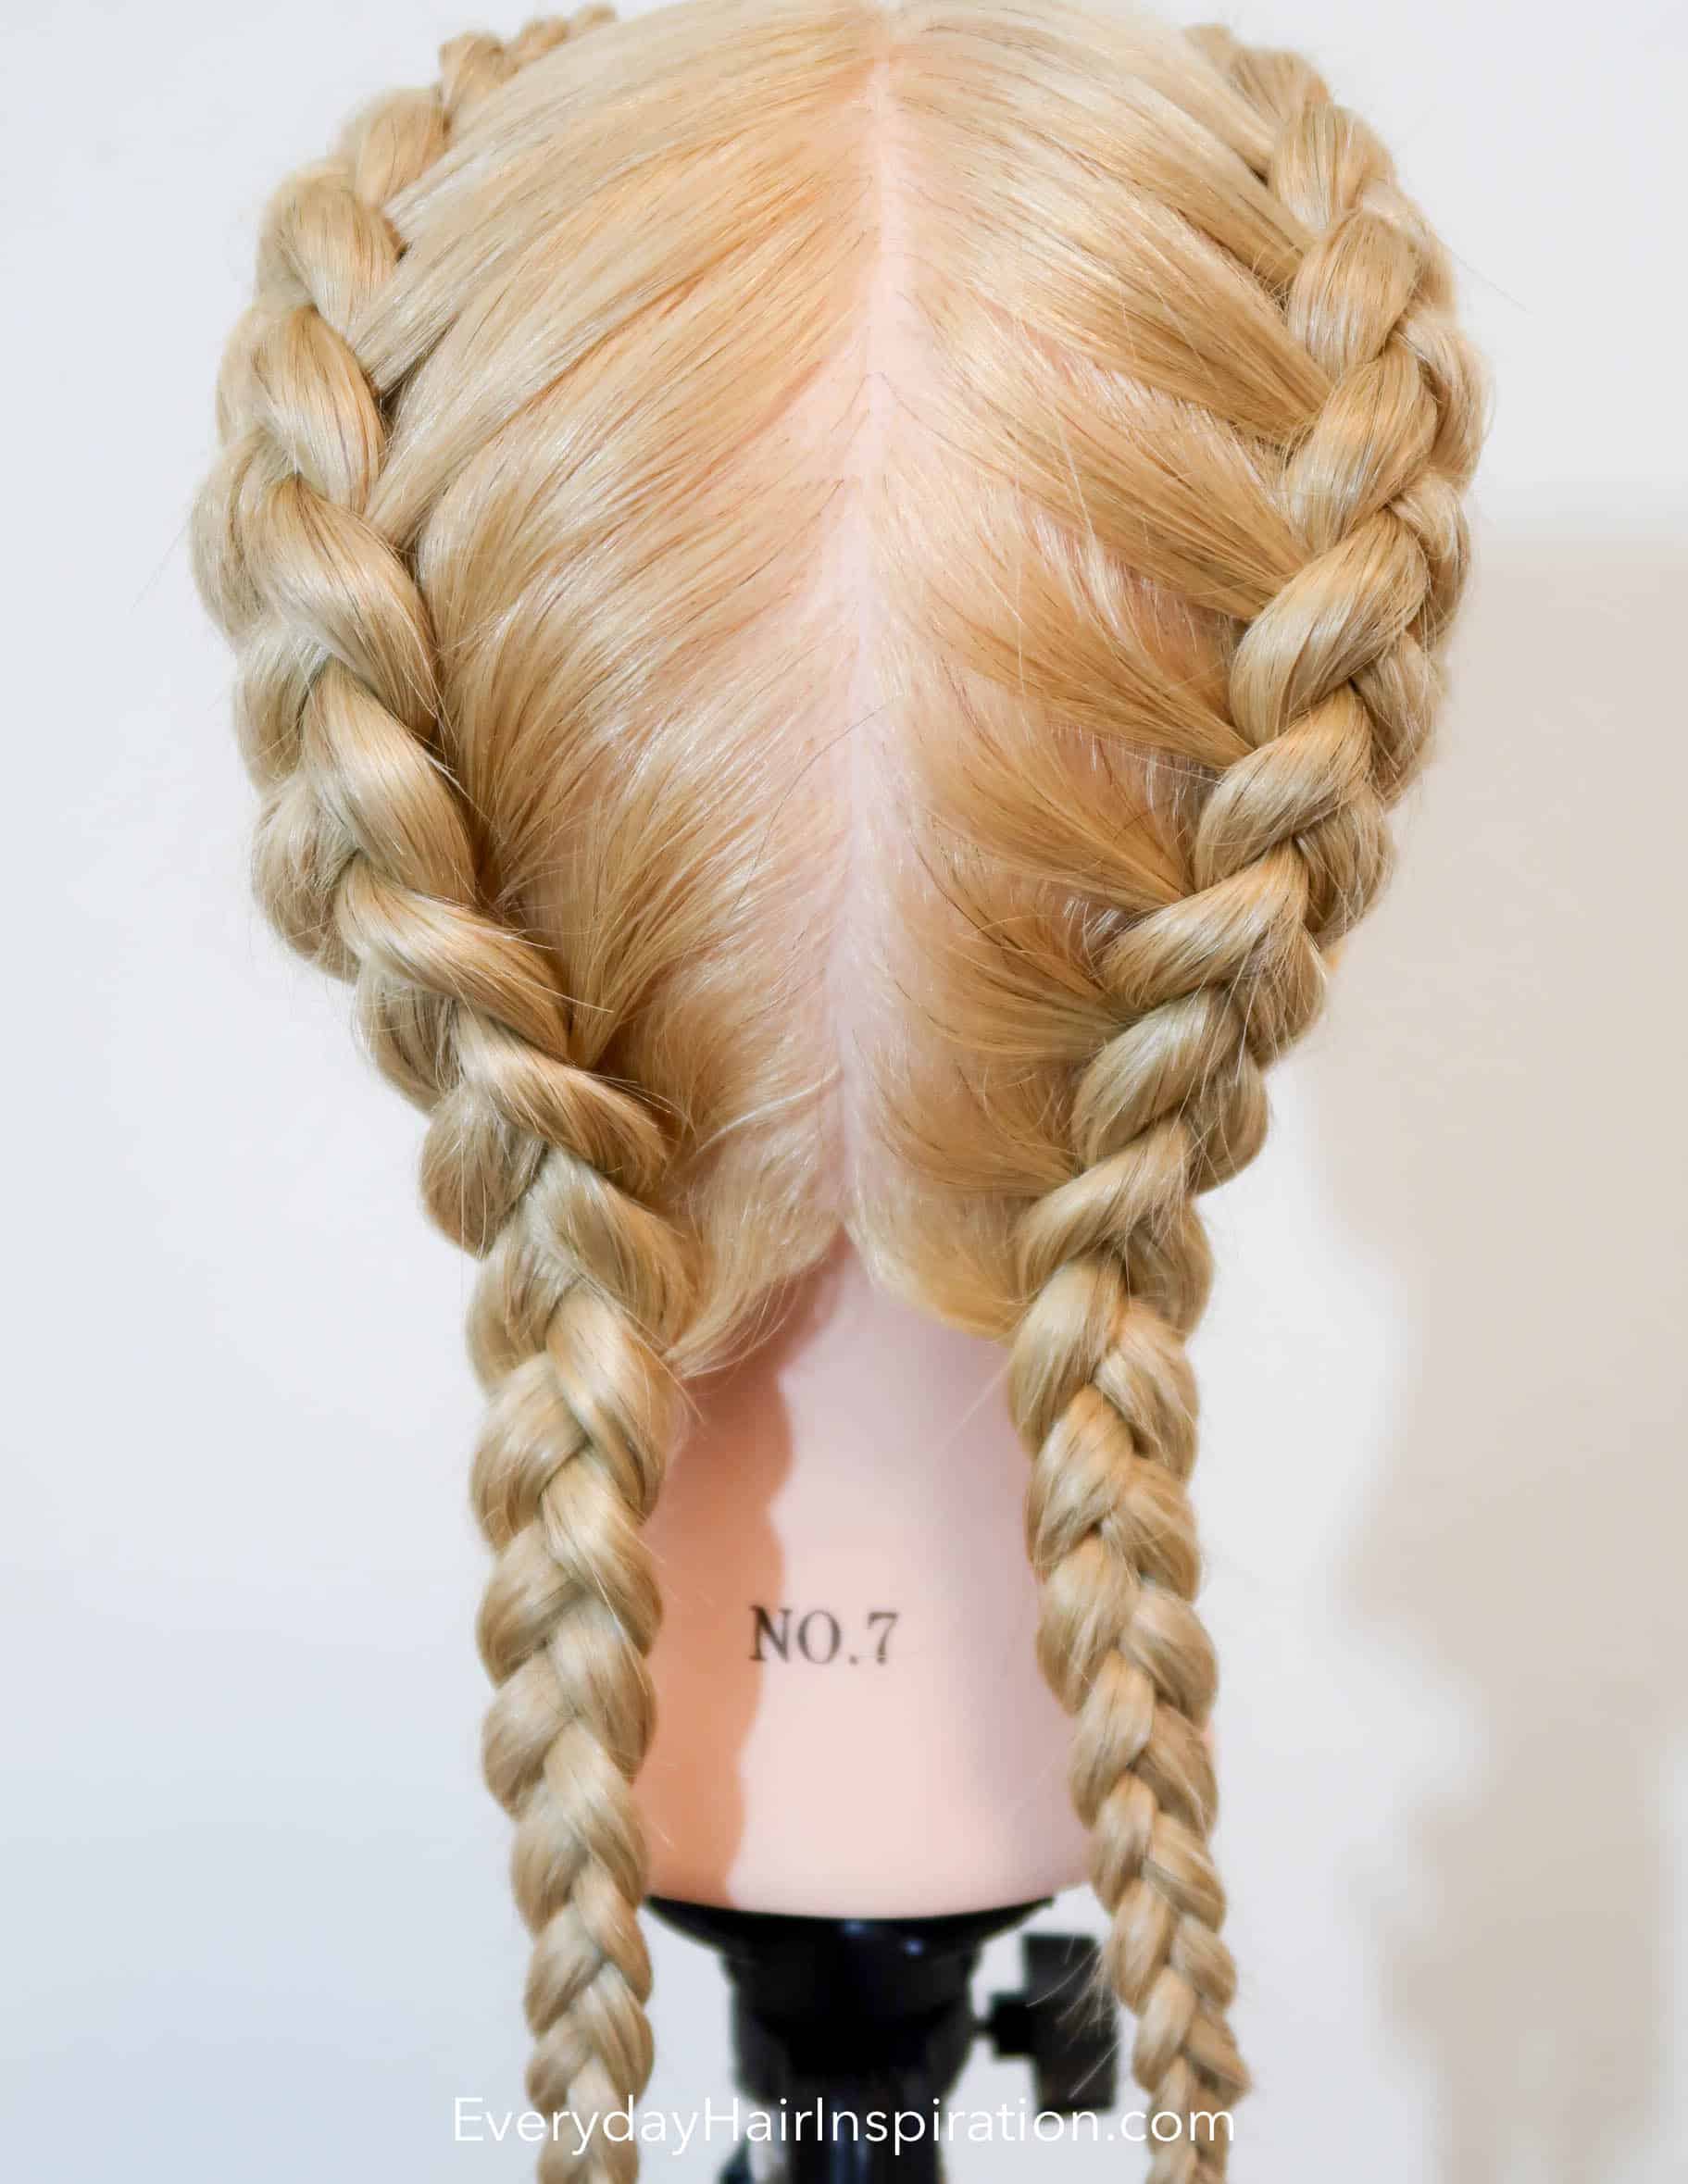 Dutch braids for beginners - Everyday Hair inspiration